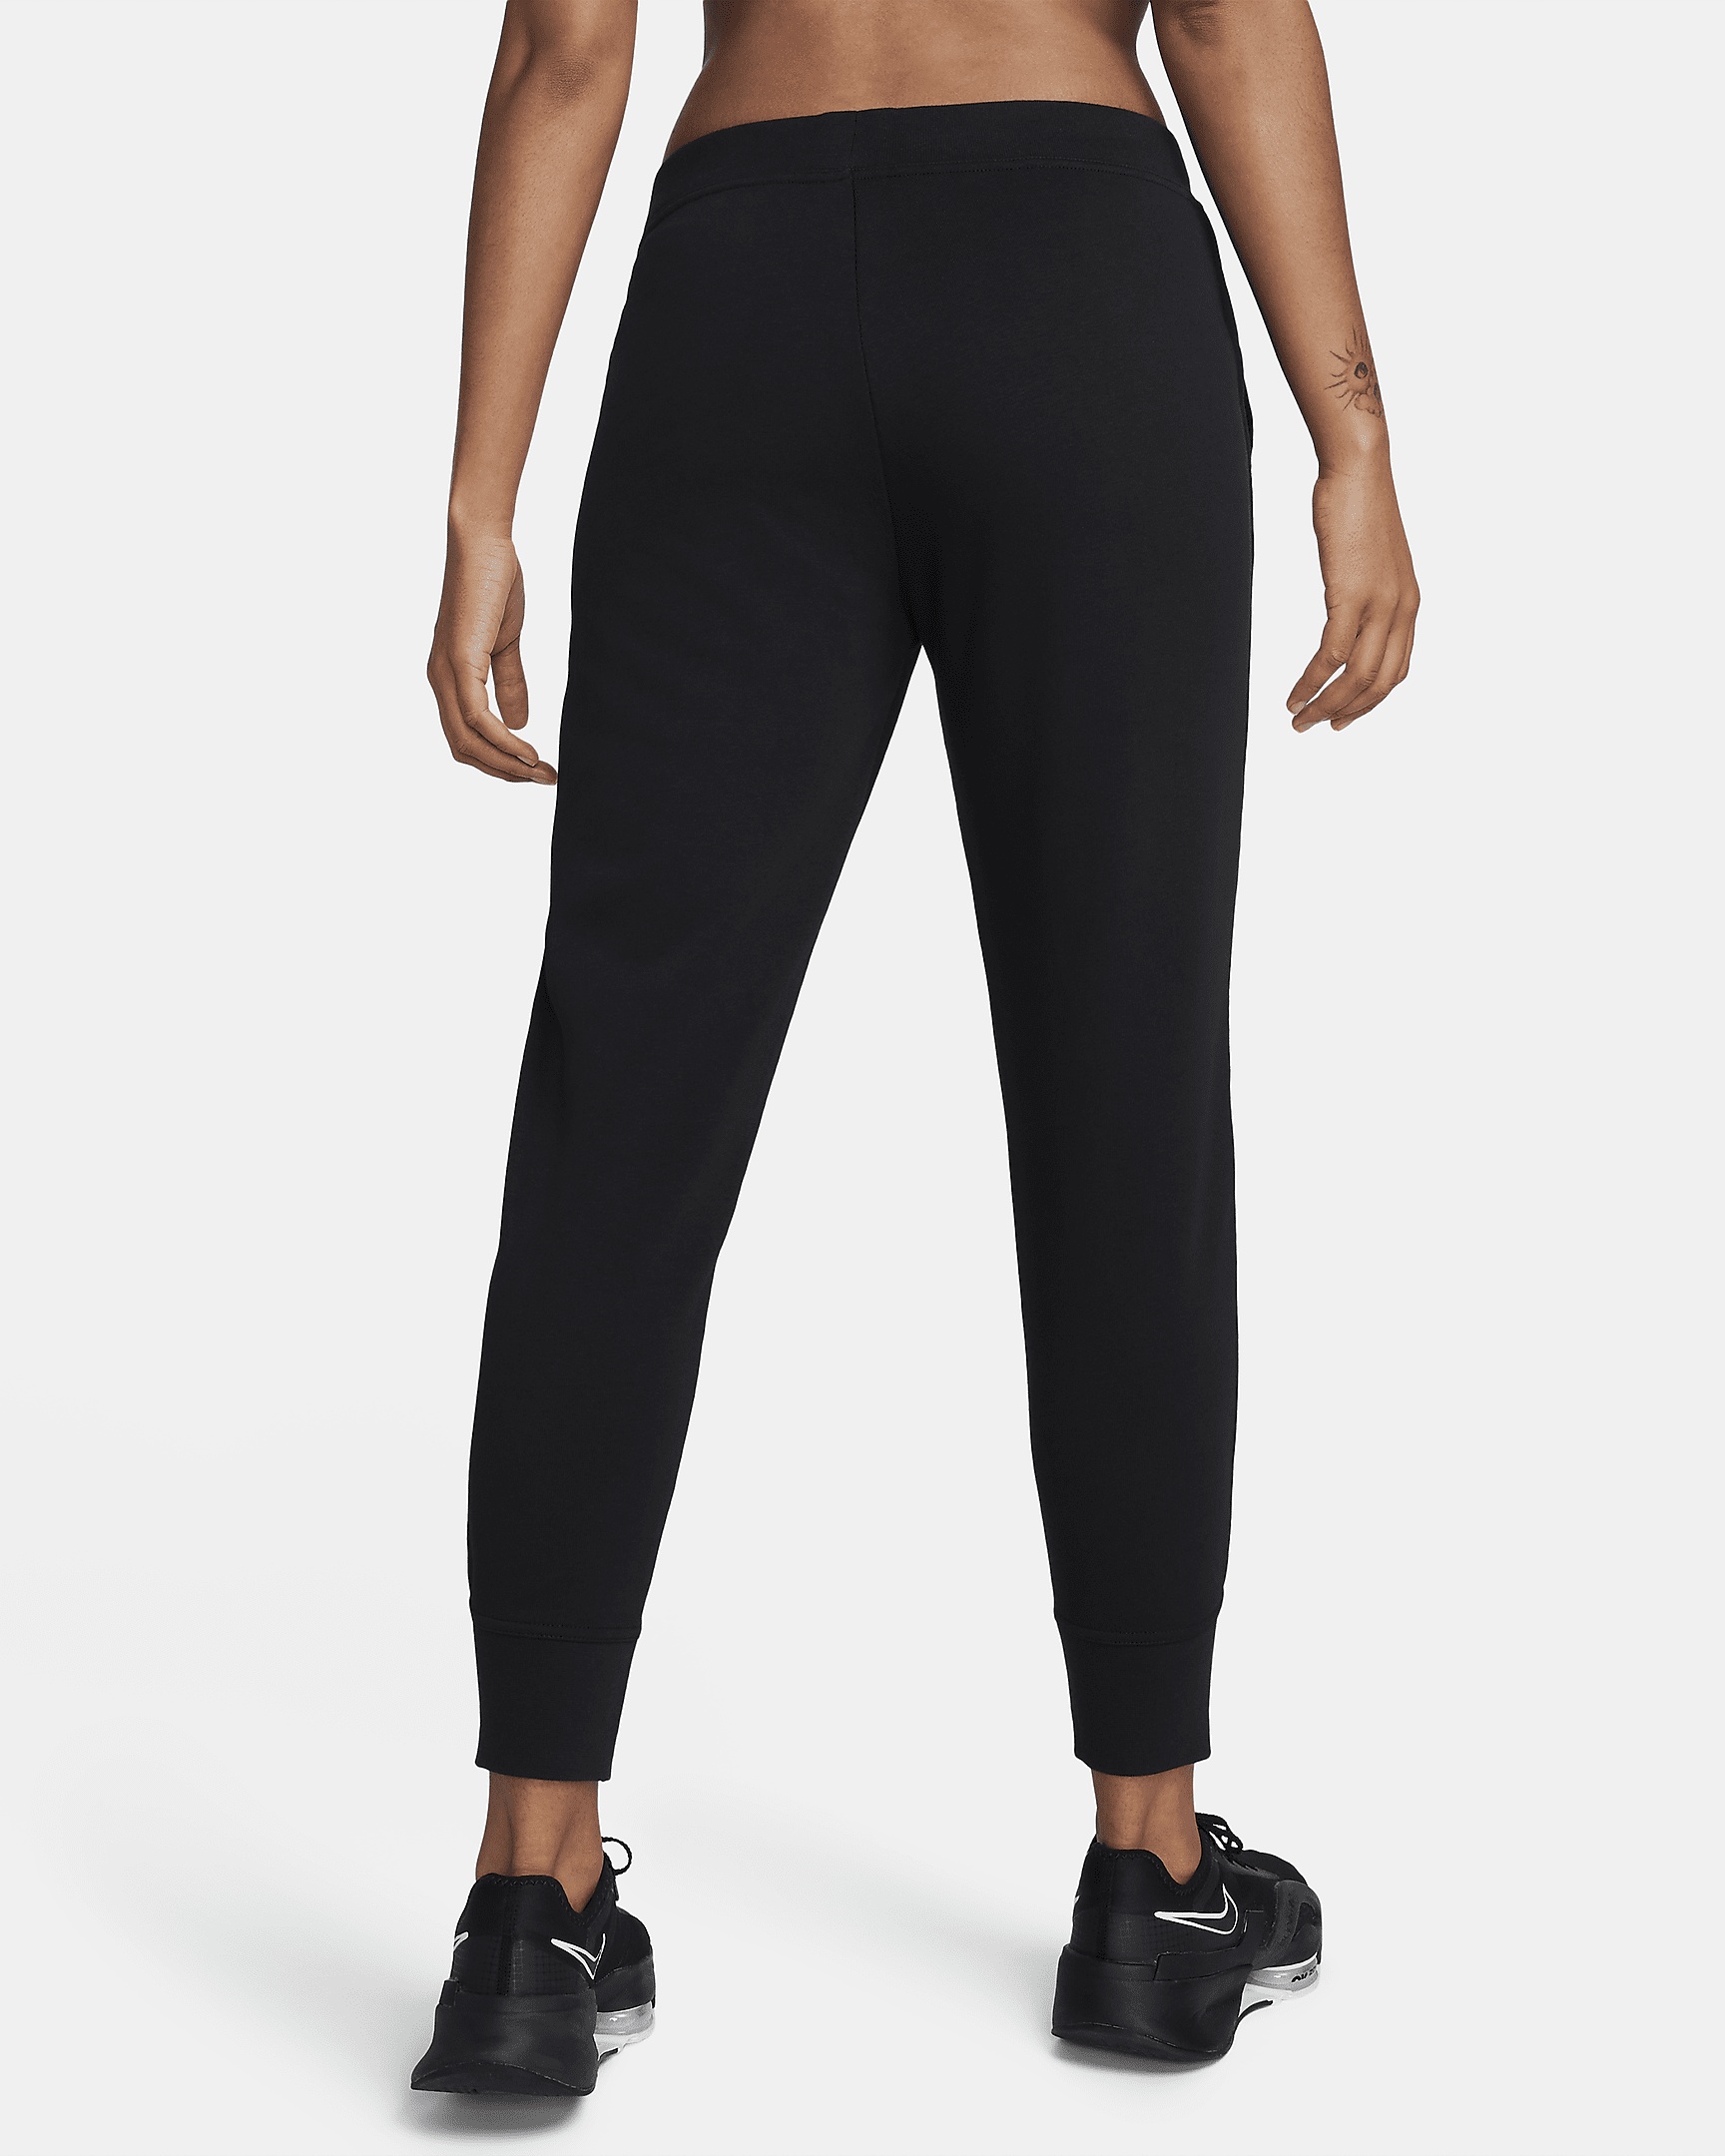 Nike Women's Dri-FIT Get Fit Training Pants - 2